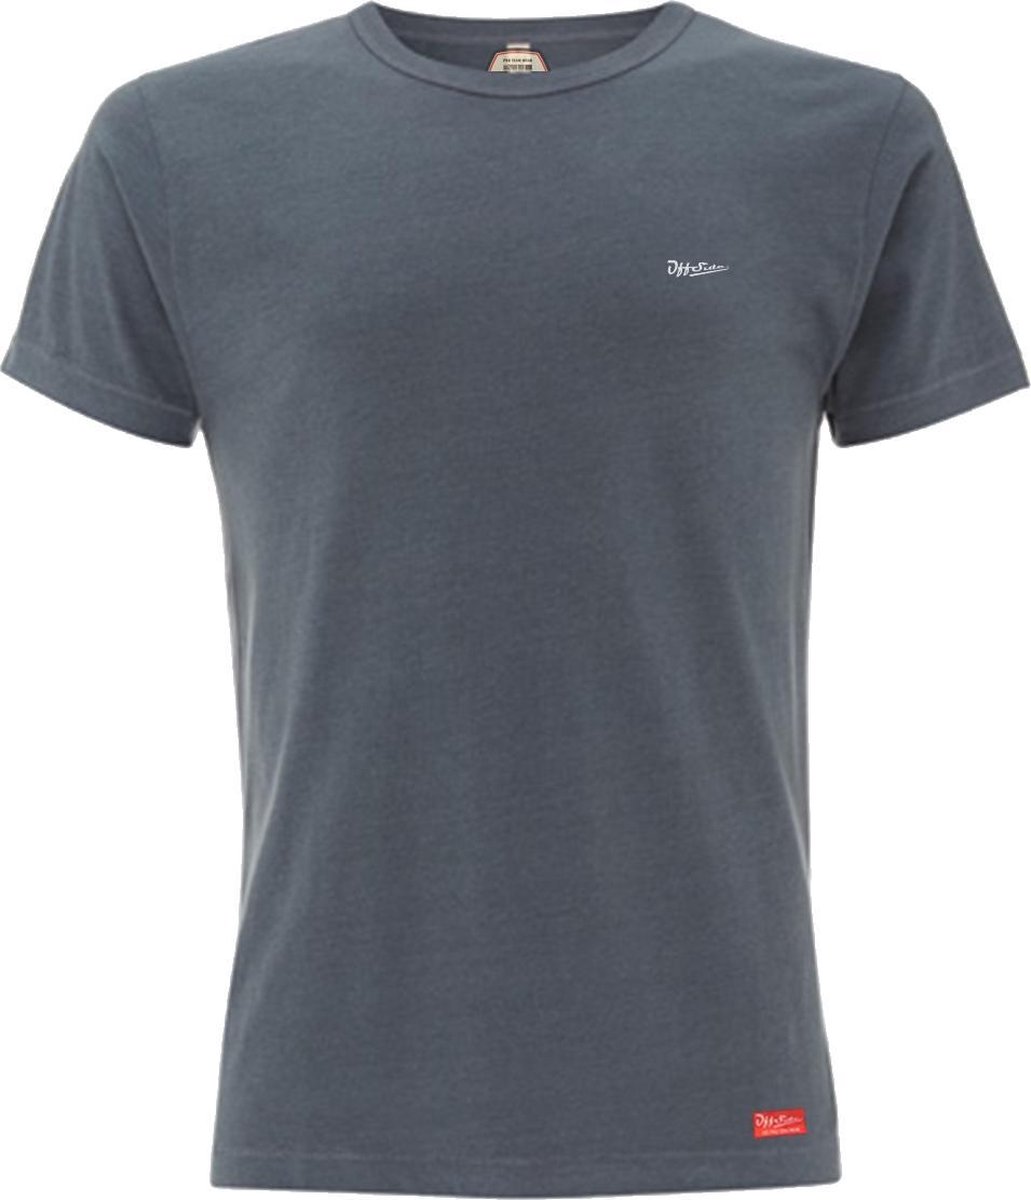 Easy .. T-Shirt Regular fit Strech Charcoal - Maat L - Off Side - incl. Gratis rugzak